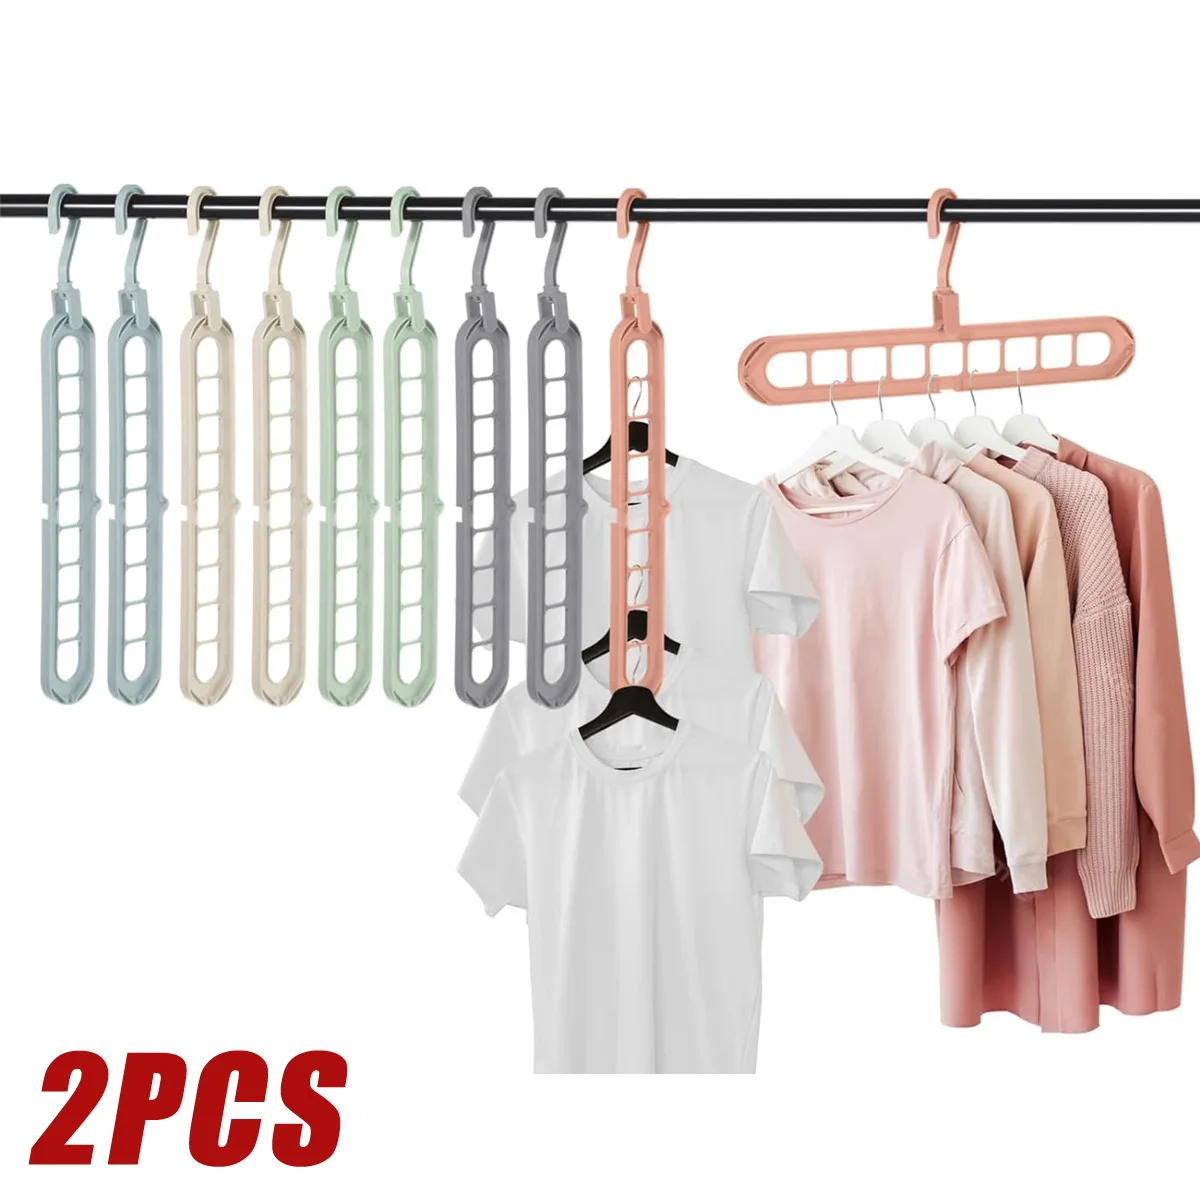 

9-hole Clothes hanger organizer Space Saving Hanger multi-function folding magic hangers drying Racks Scarf clothes Storage